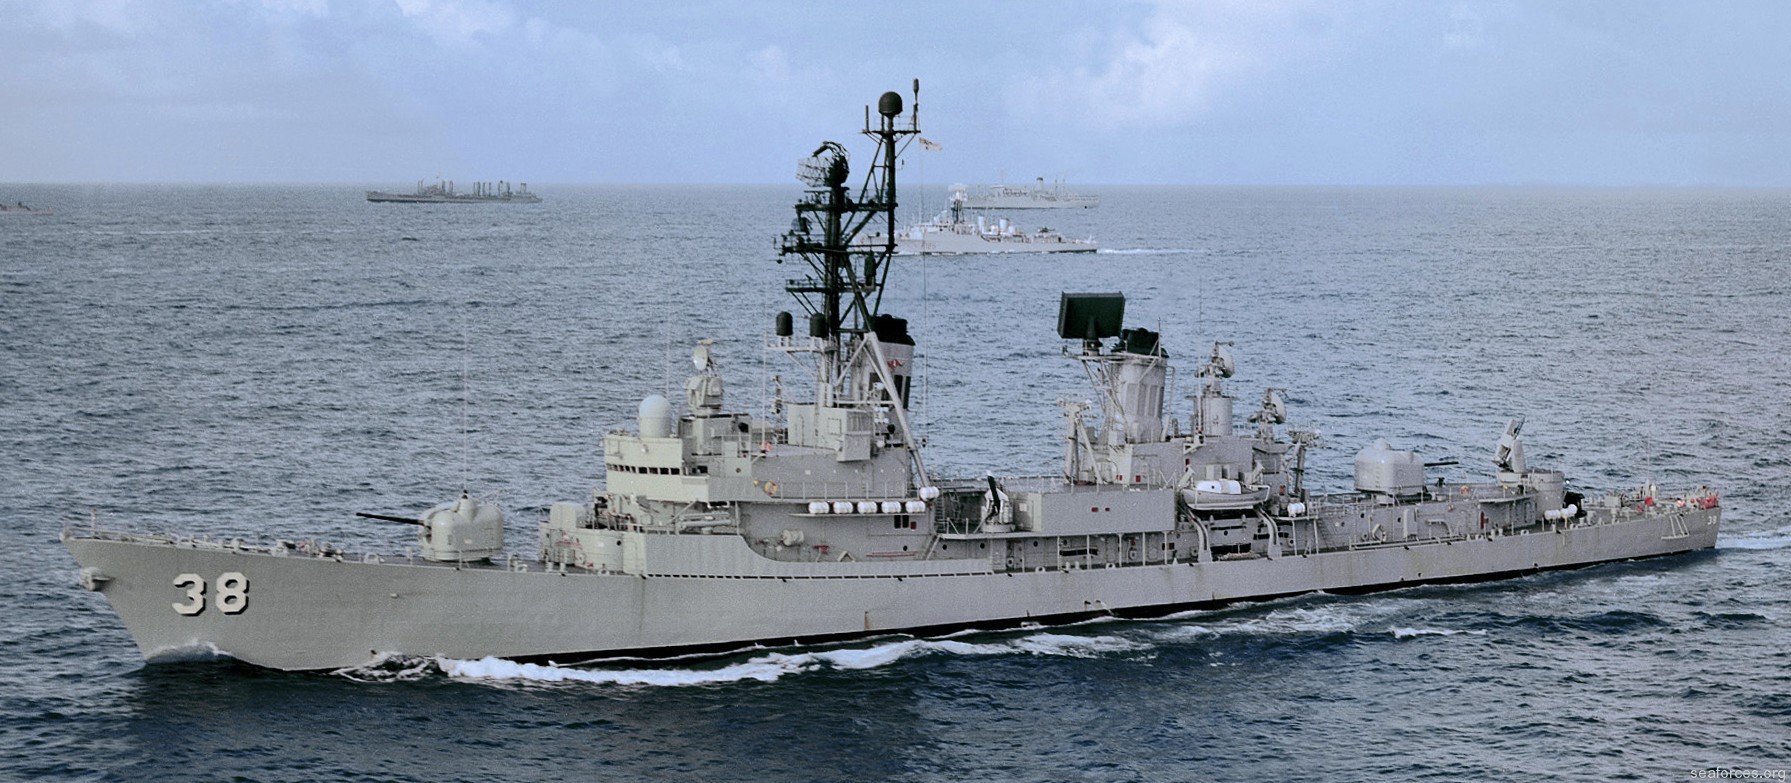 hmas perth ddg-38 guided missile destroyer royal australian navy 02